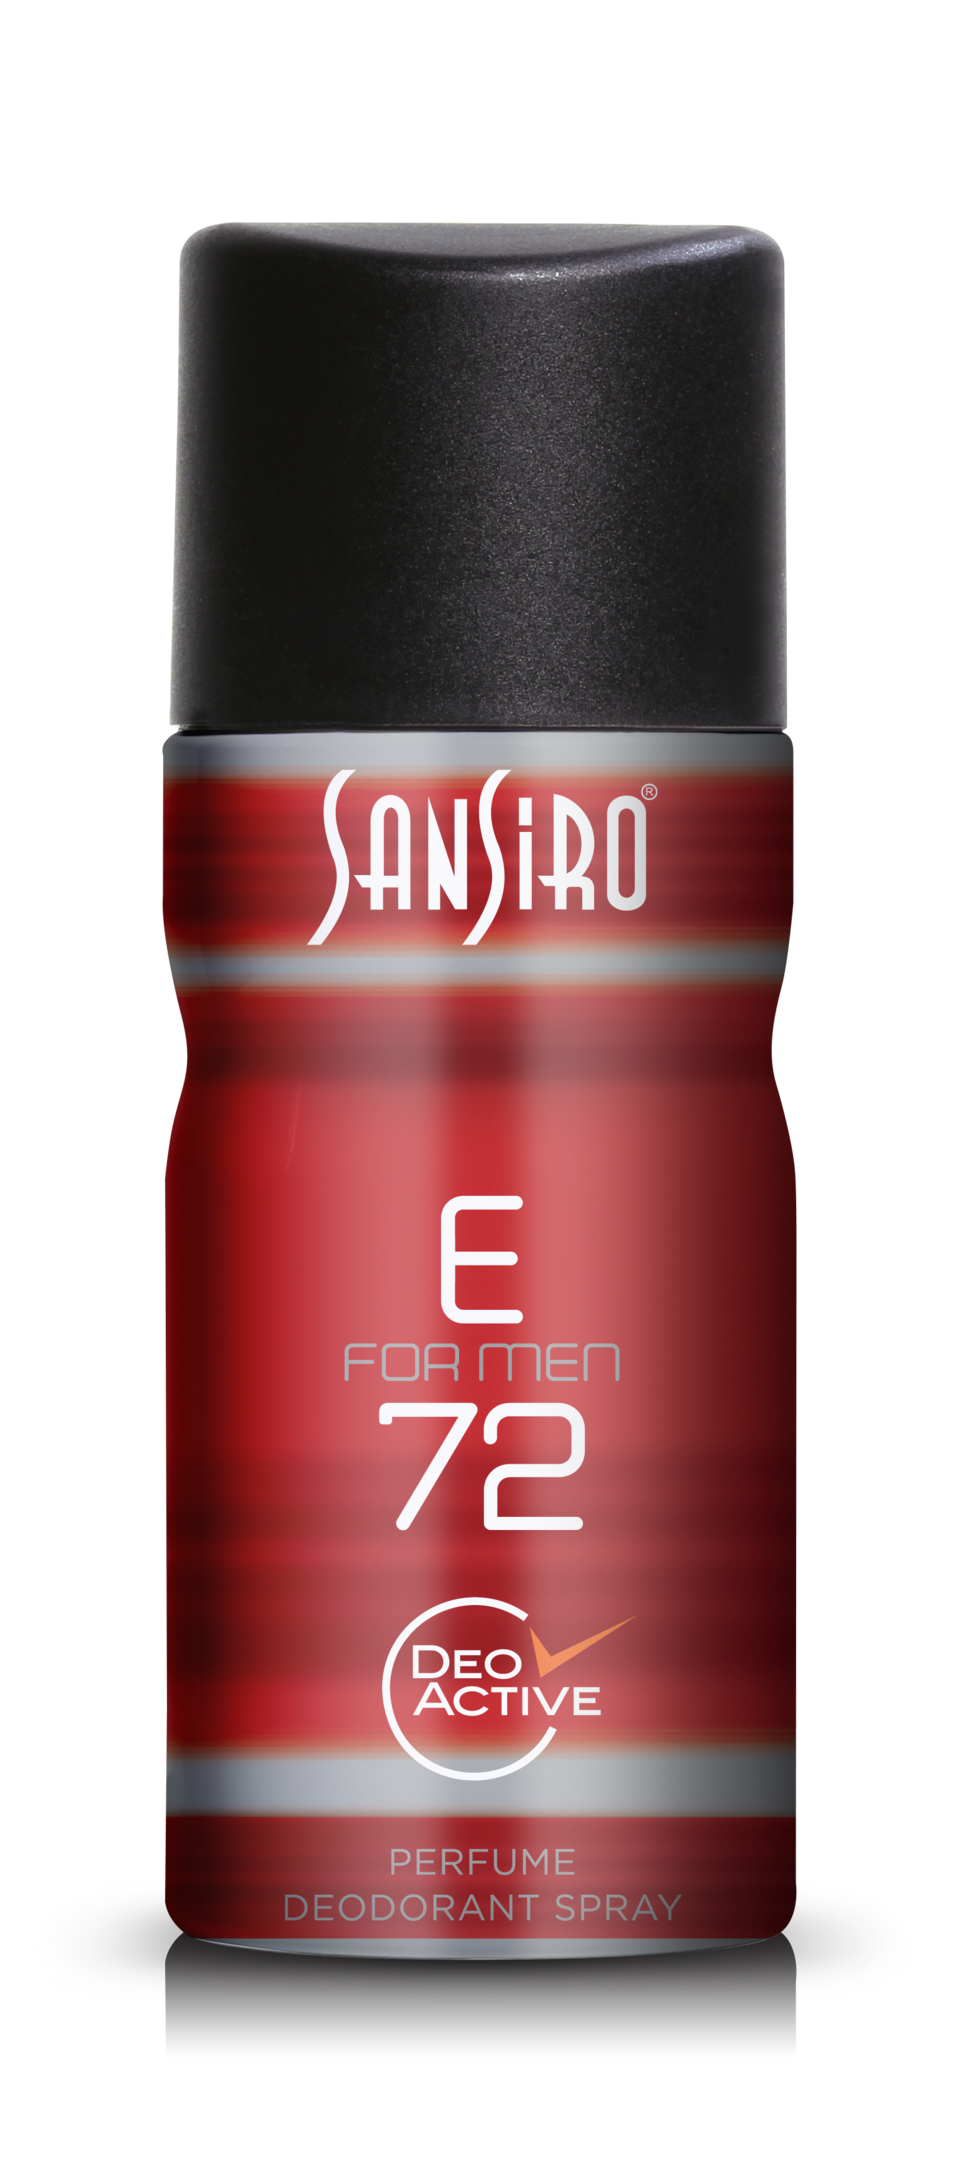 Sansiro Perfume - Deo For Men - Deodorant E72